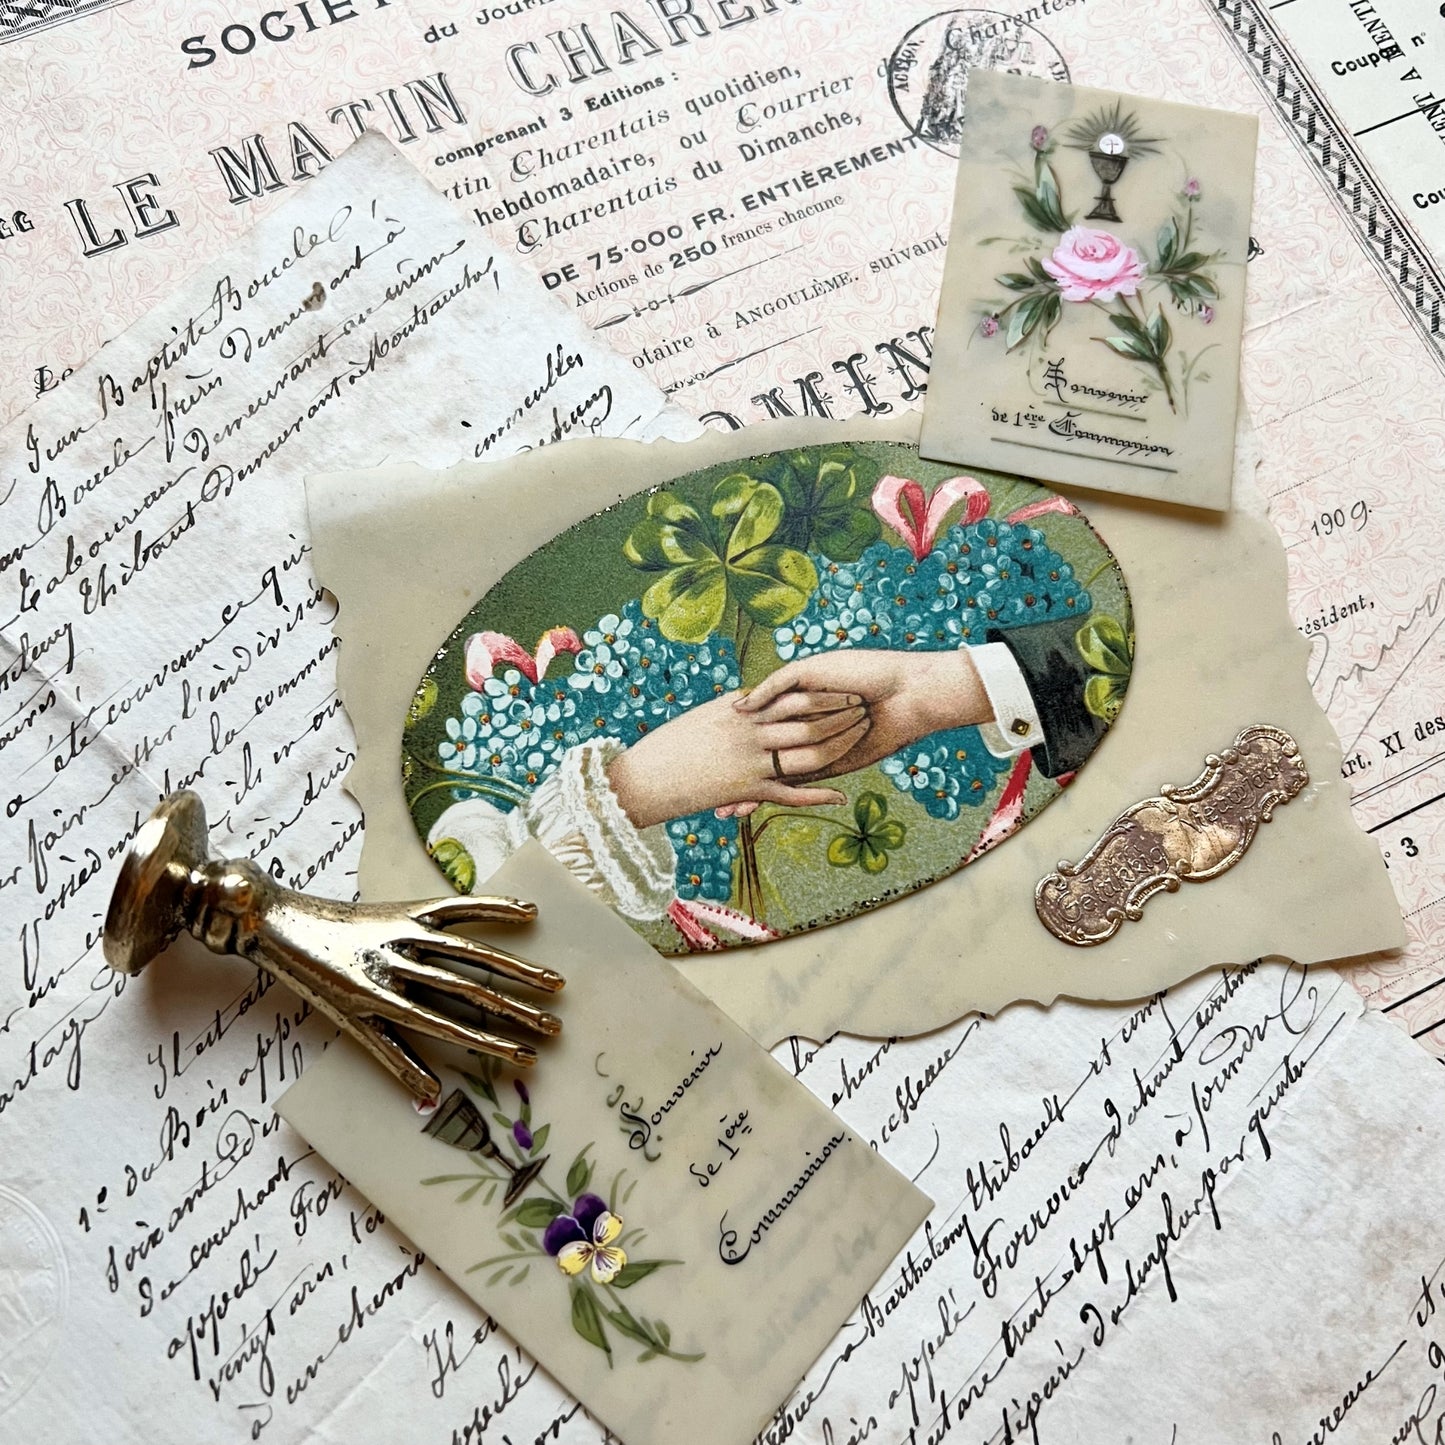 【Antique】Celluloid Cards and Hand Motif Clip Set